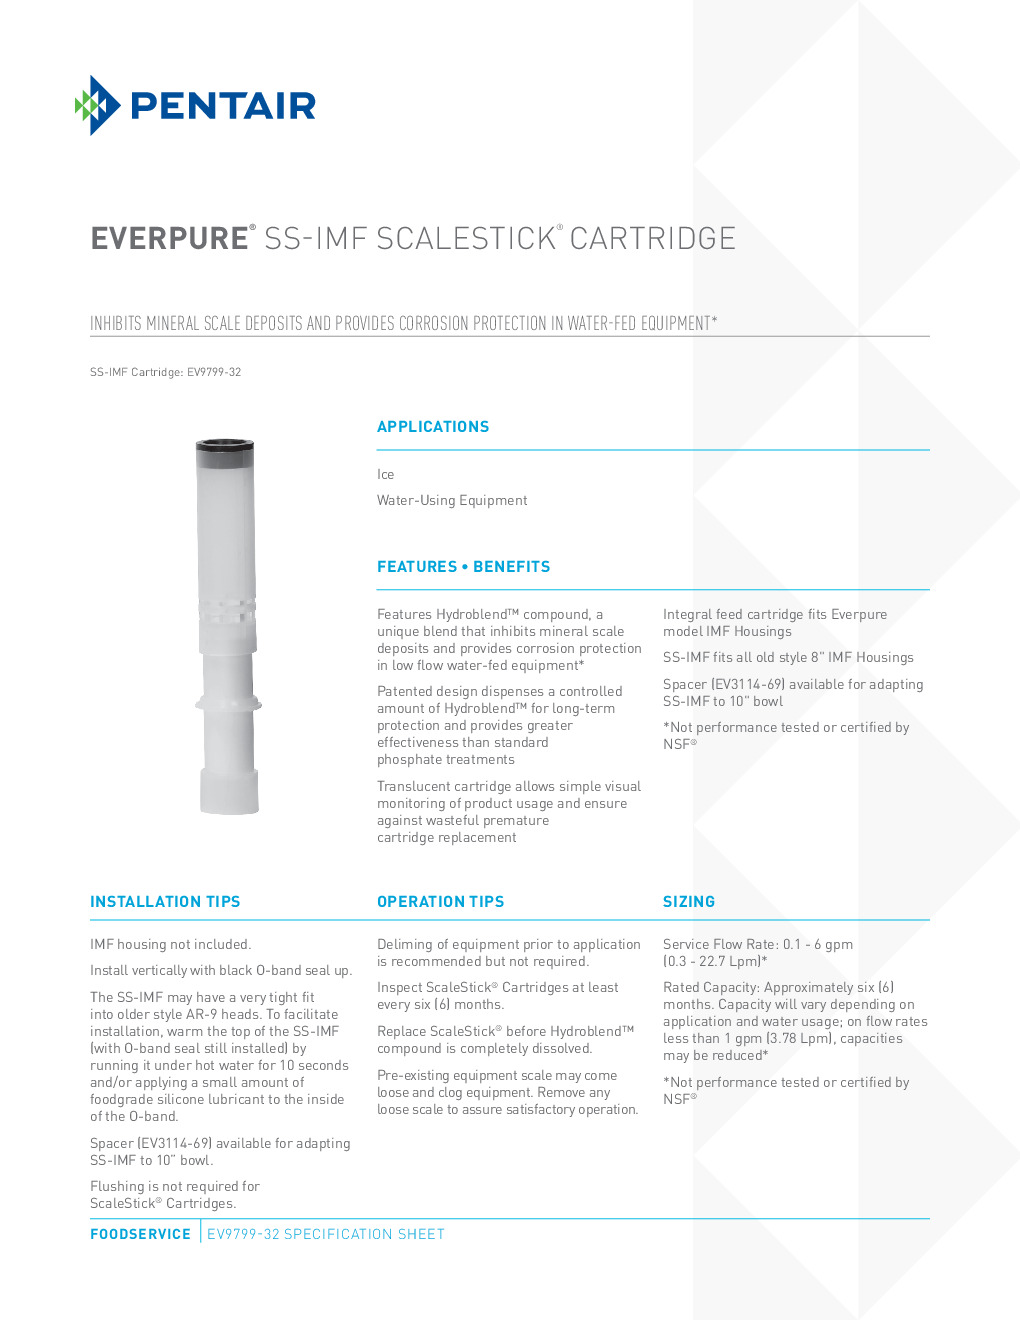 Everpure EV979932 Cartridge Water Filtration System